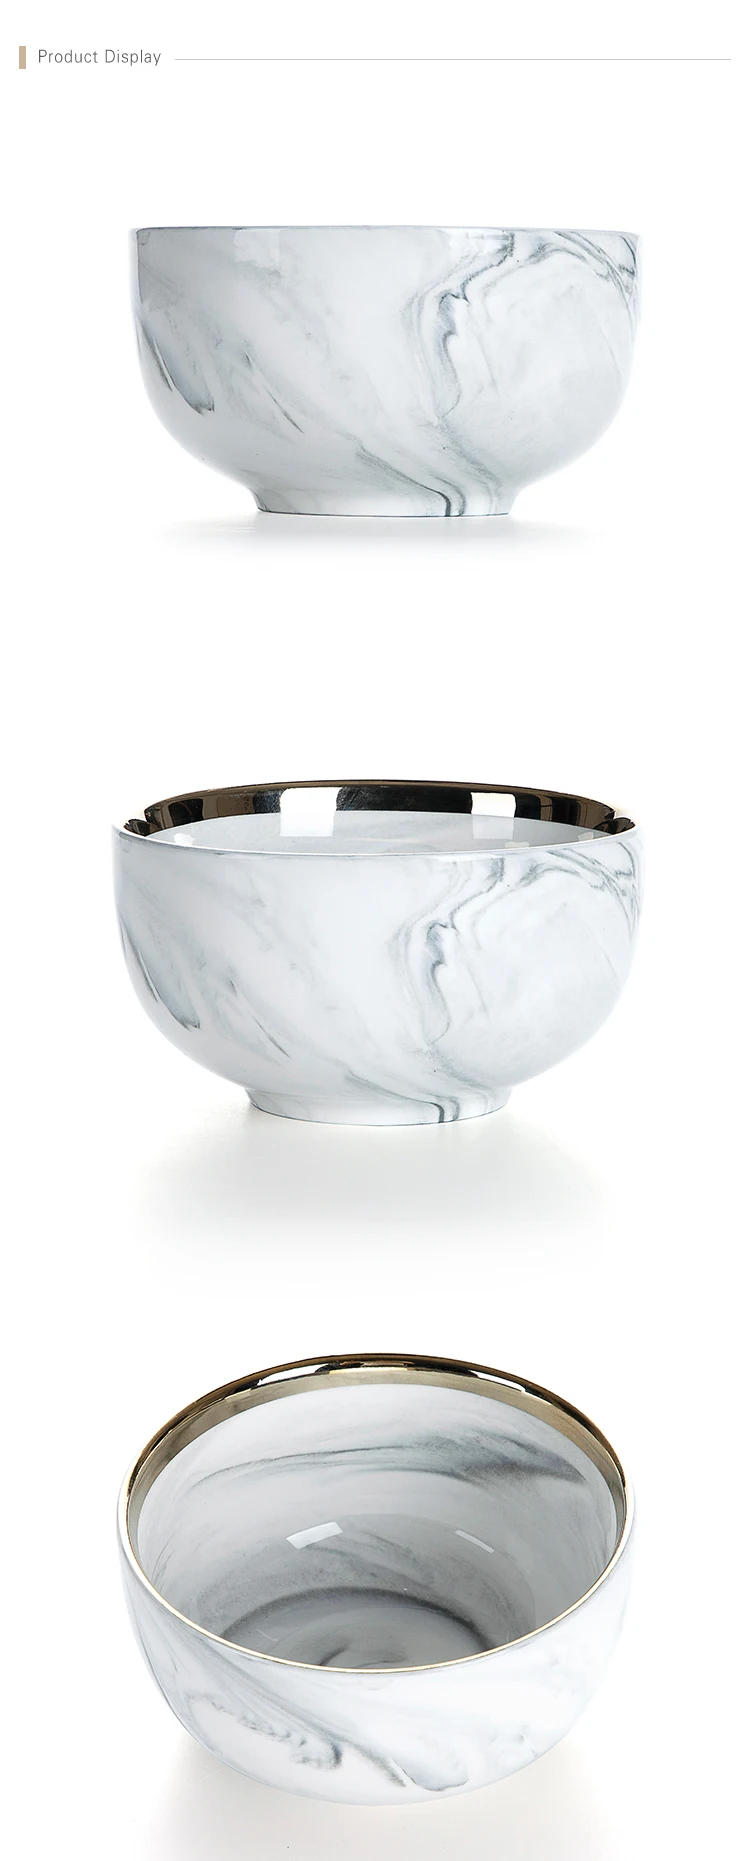 Best Selling Gold Rim Deep Mixing Bowl, Restaurant Supplies Gold Rim Restaurant Bowl Small Ceramic Bowl^